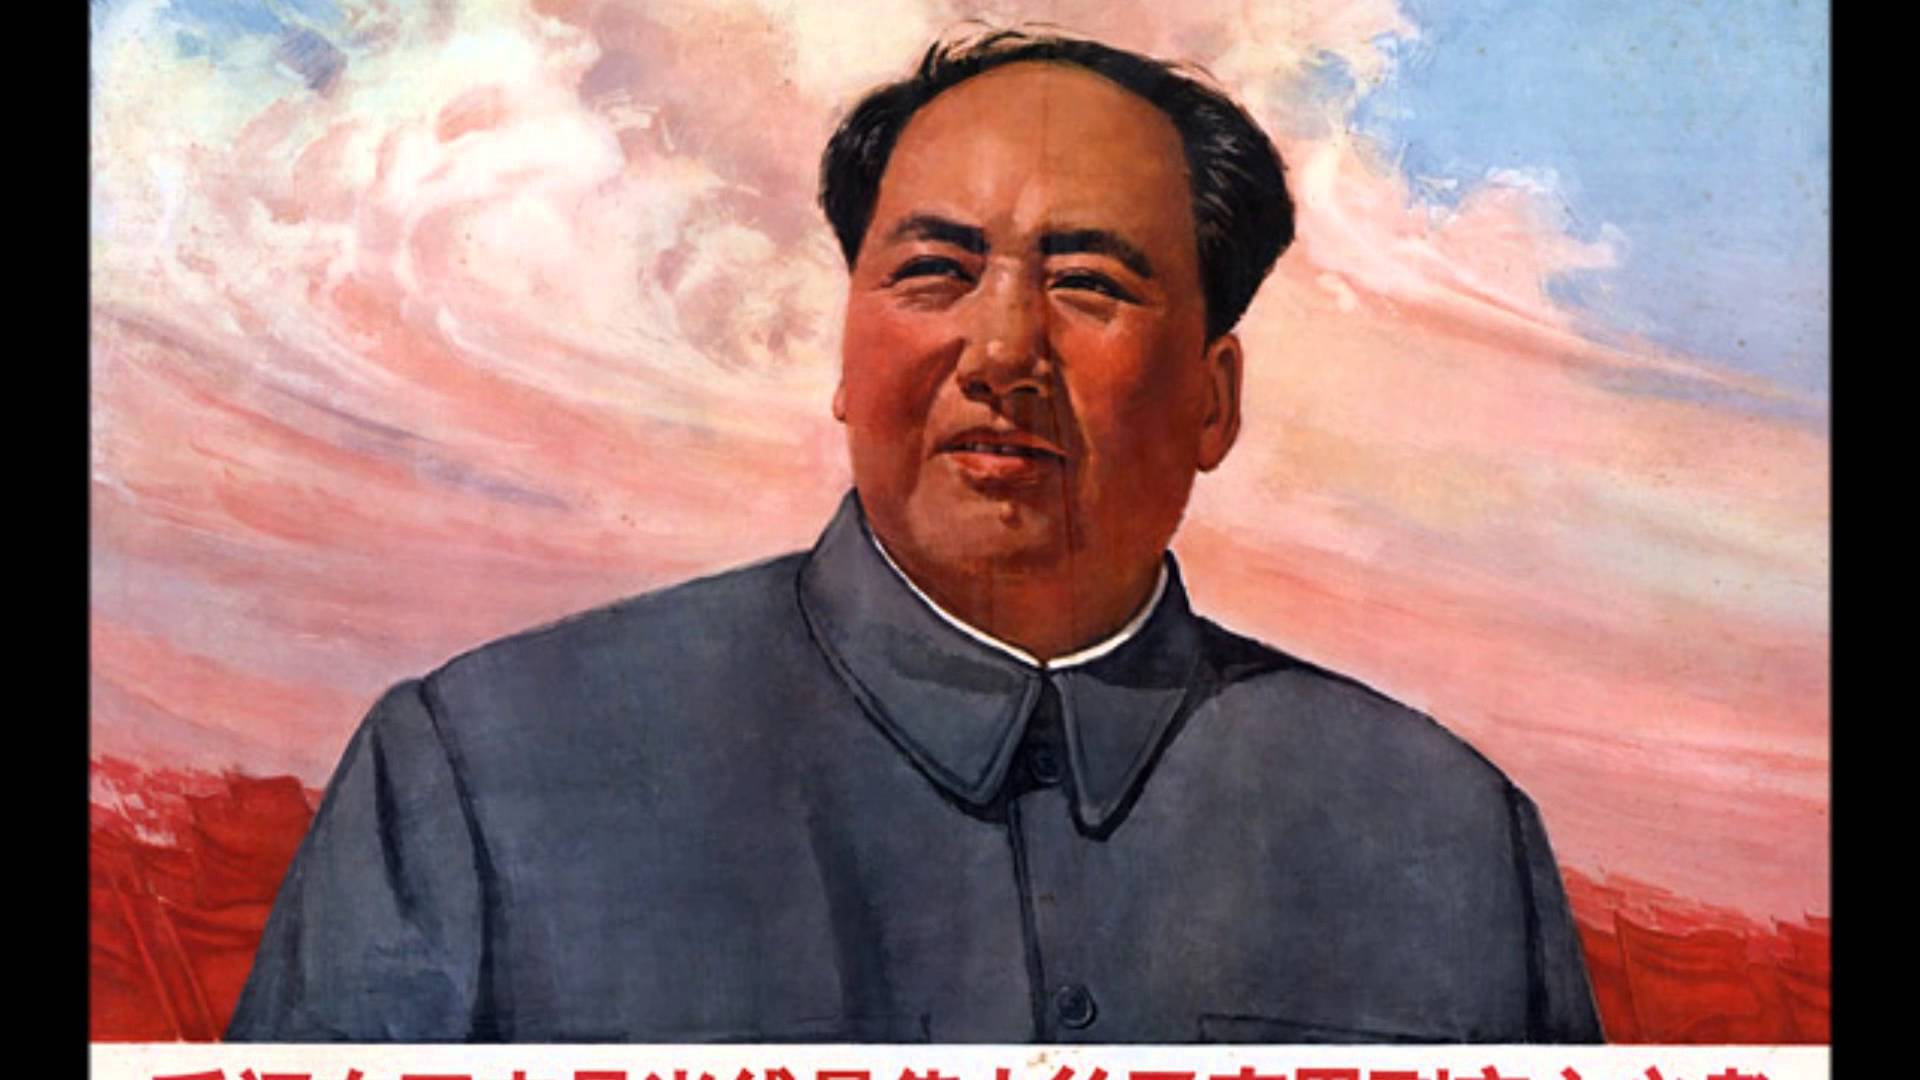 Mao Zedong Revolution